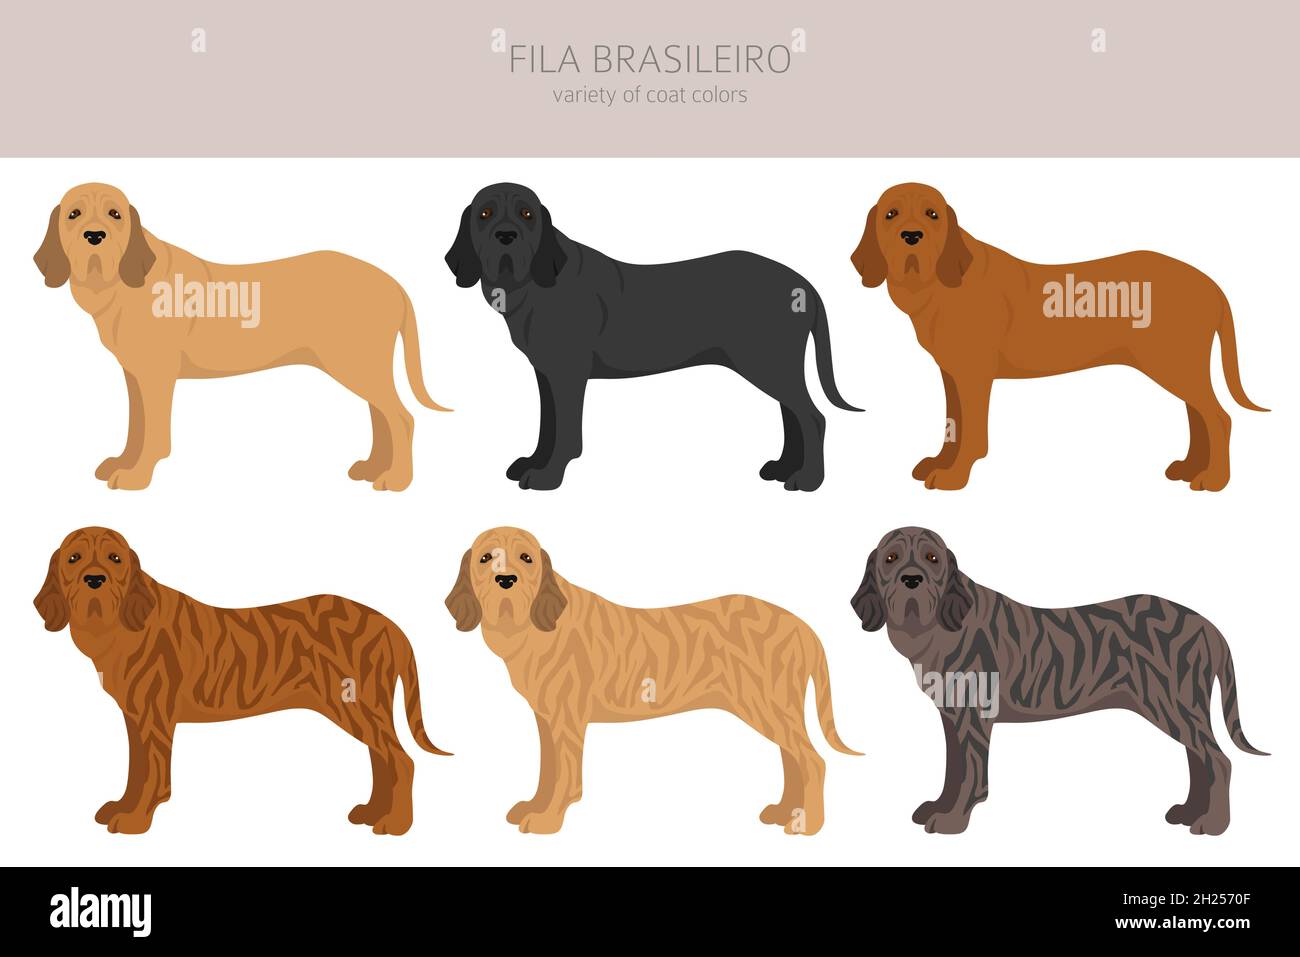 https://c8.alamy.com/comp/2H2570F/fila-brasileiro-clipart-different-poses-coat-colors-set-vector-illustration-2H2570F.jpg